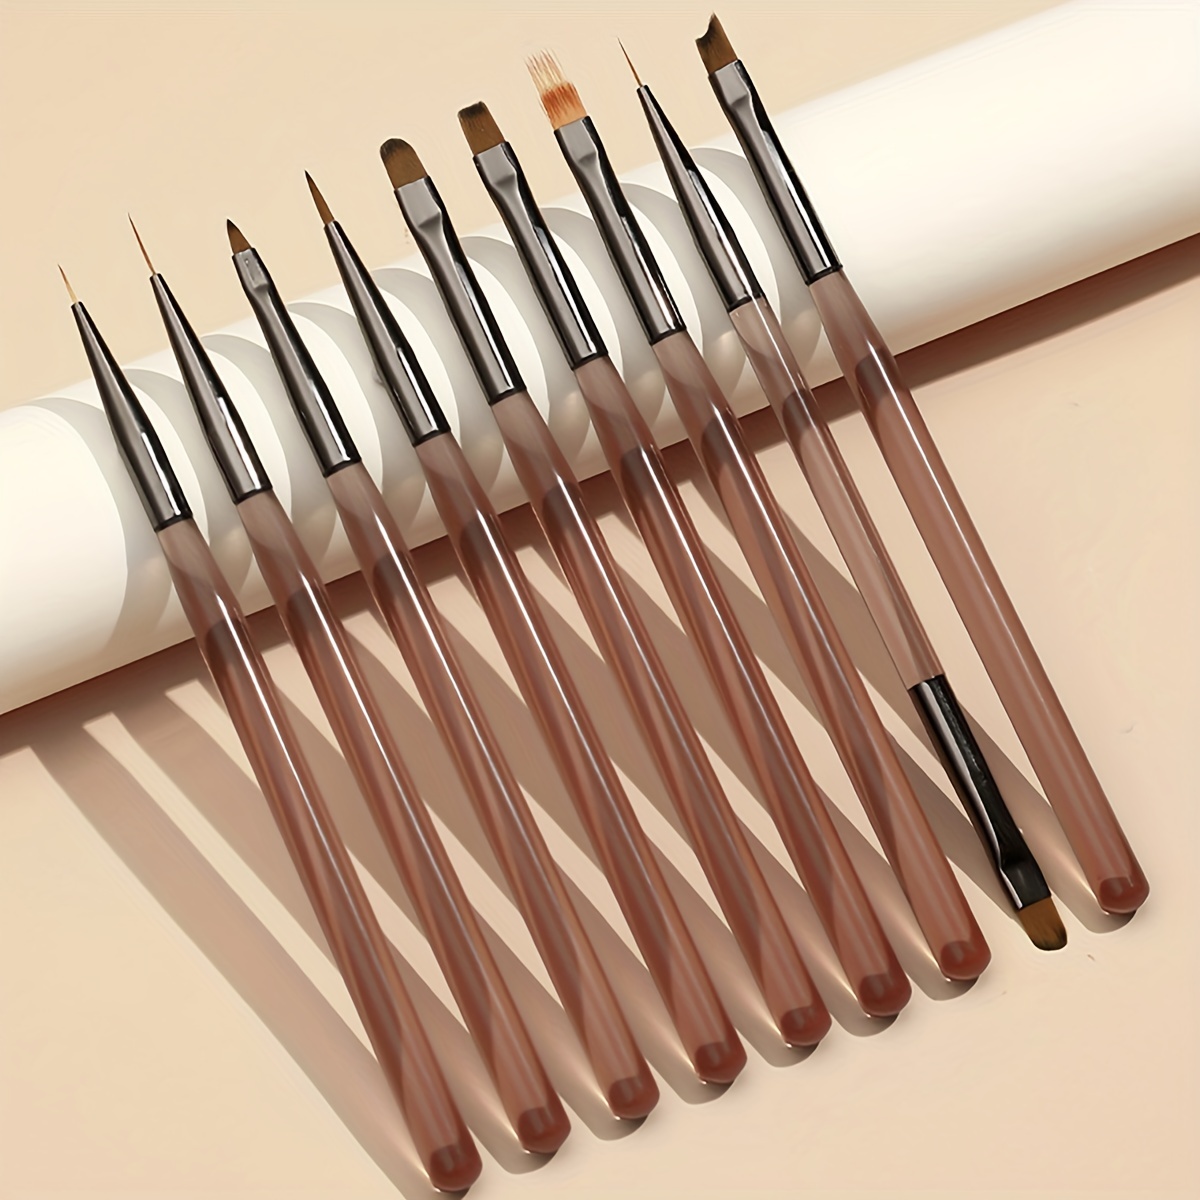 

9pcs Nail Art Pen Brush Set Sweeping Pen Double-headed Construction Pen Phototherapy Painting Pull Line Pen Gradient Pen Manicure Pedicure Nail Art Tools Kit